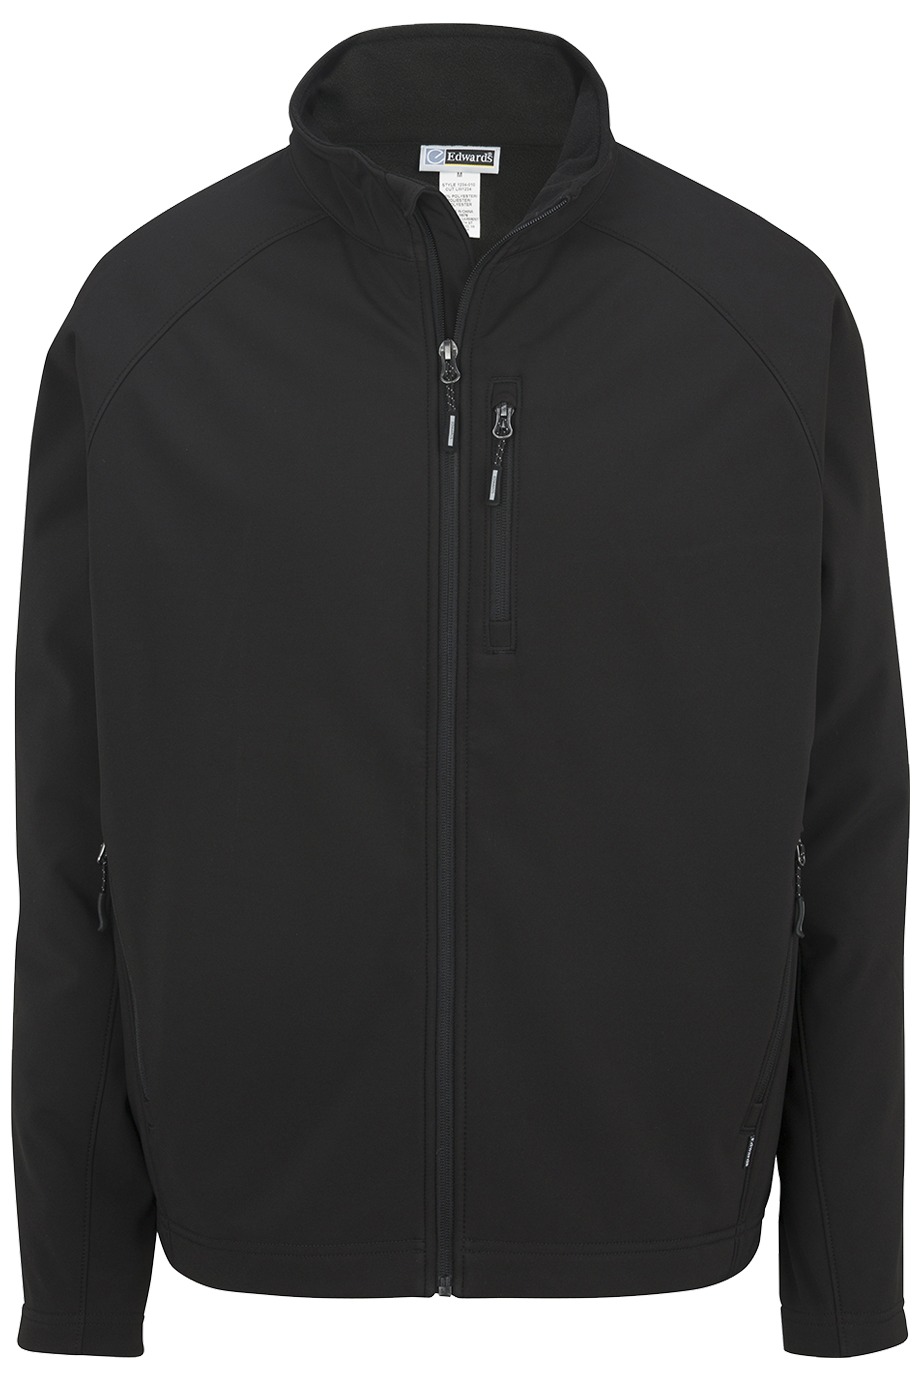 Edwards Garment 3420 - Men's Soft Shell Jacket